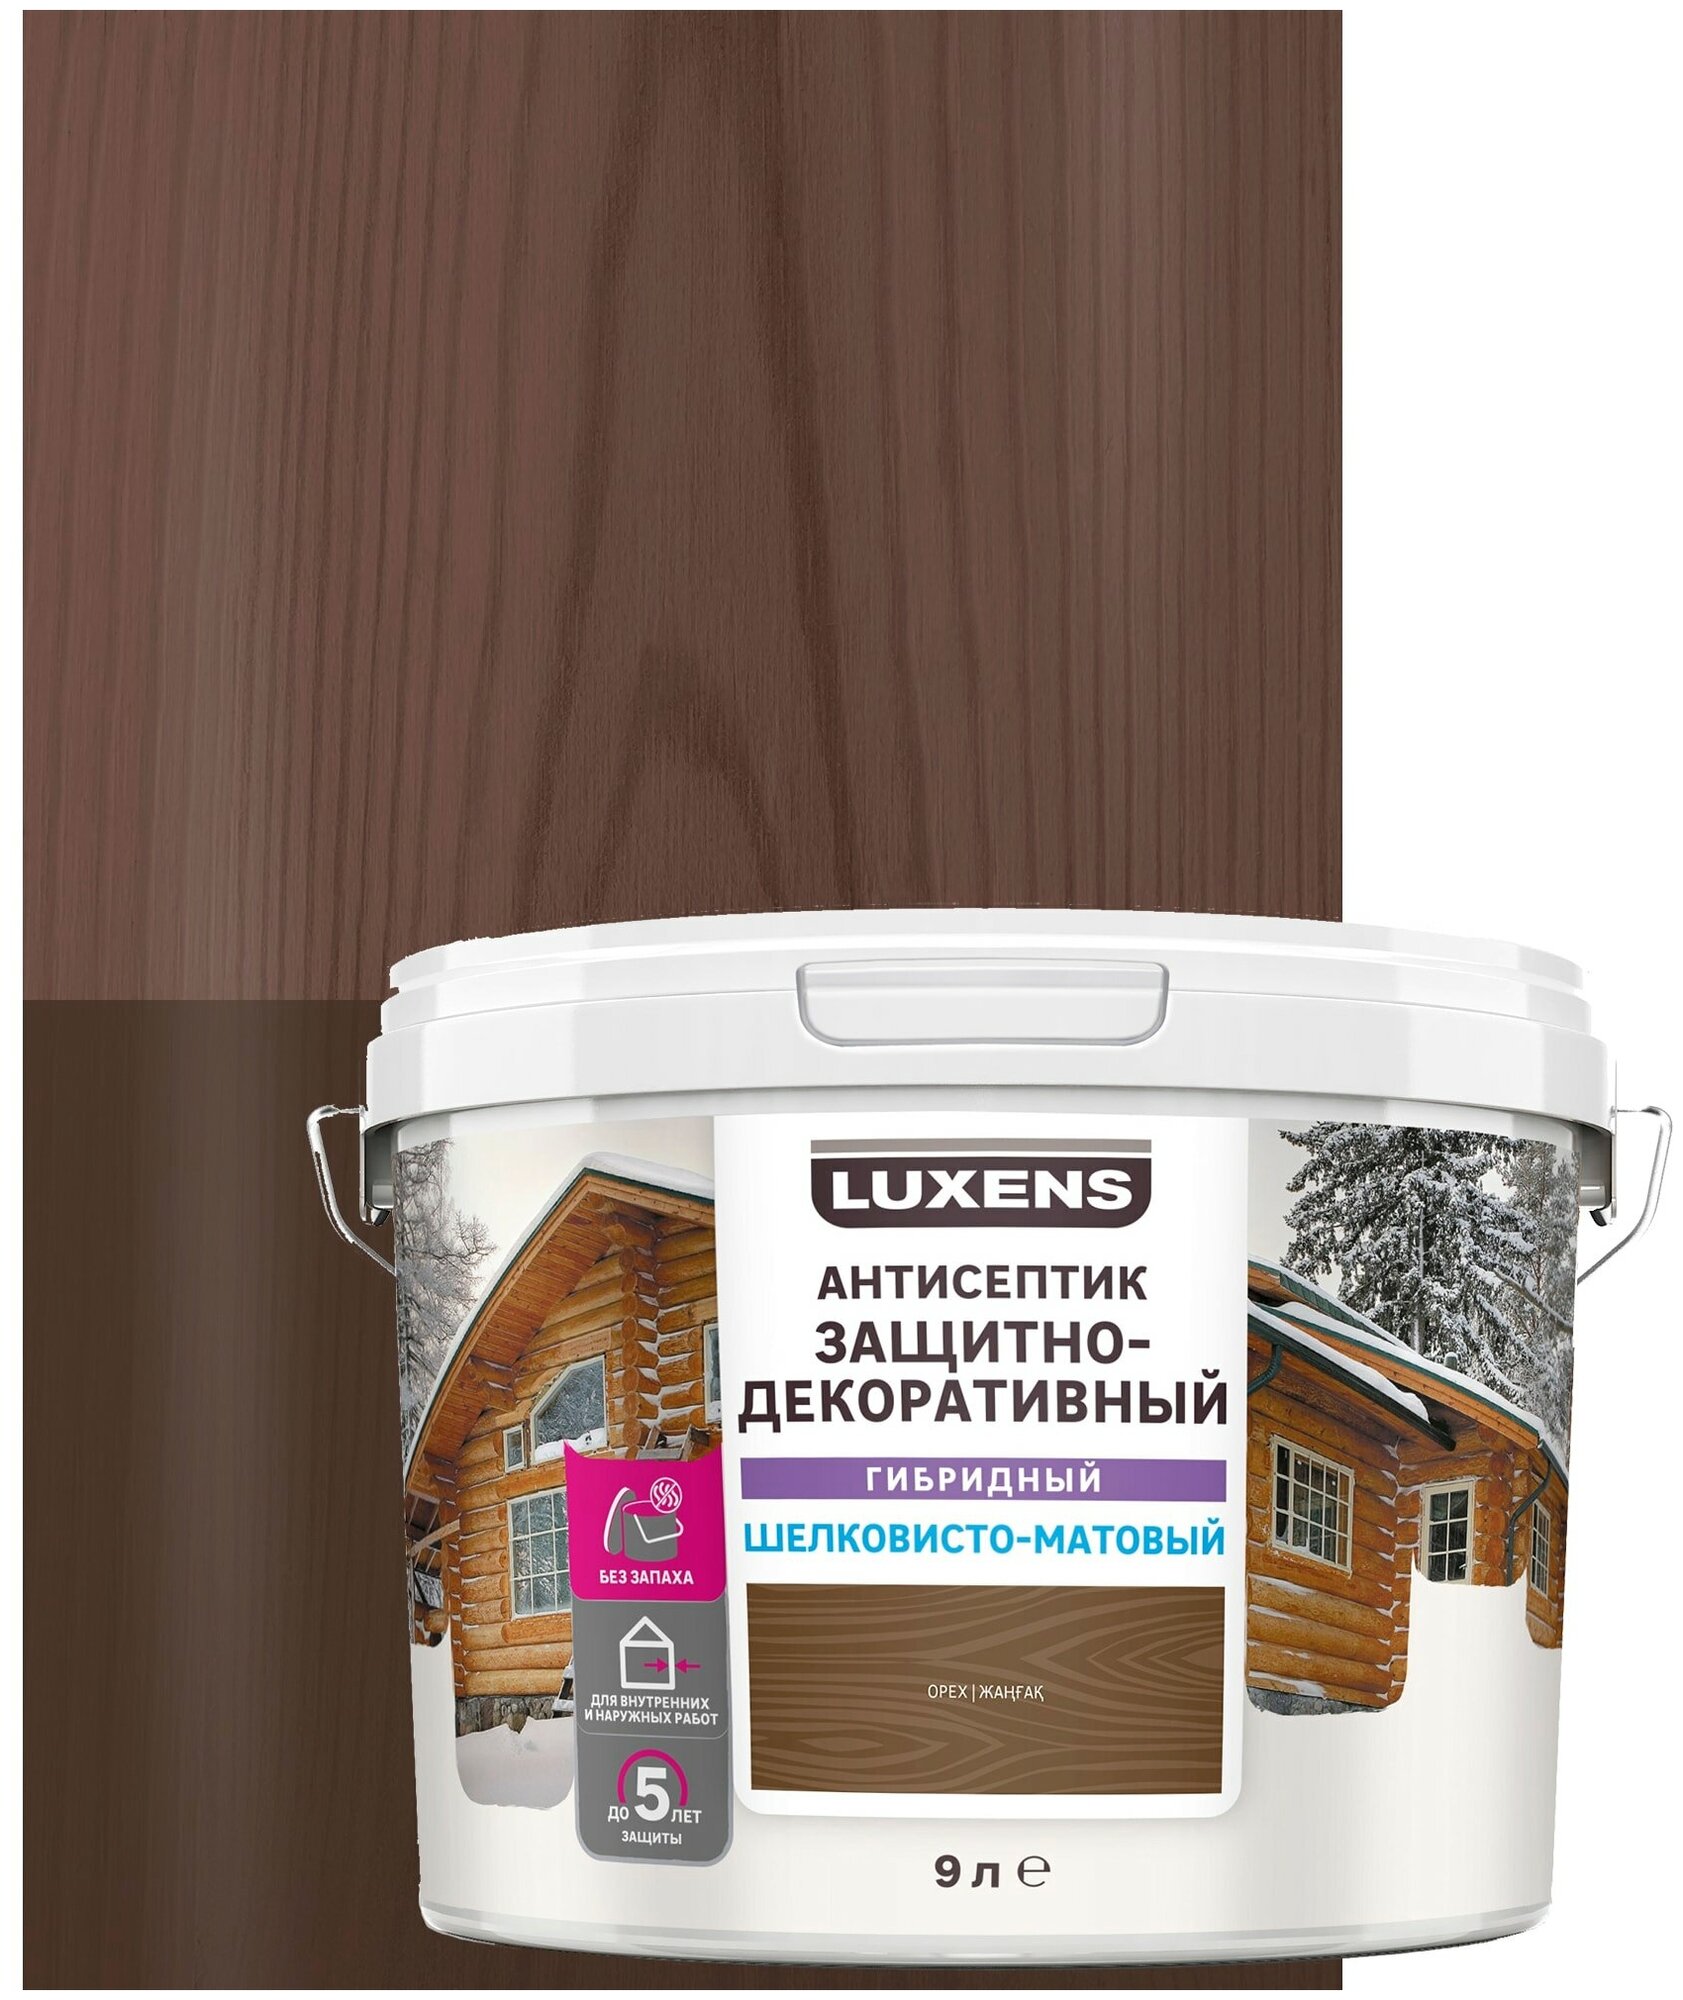 Антисептик Luxens гибридный цвет орех 9л - фотография № 1